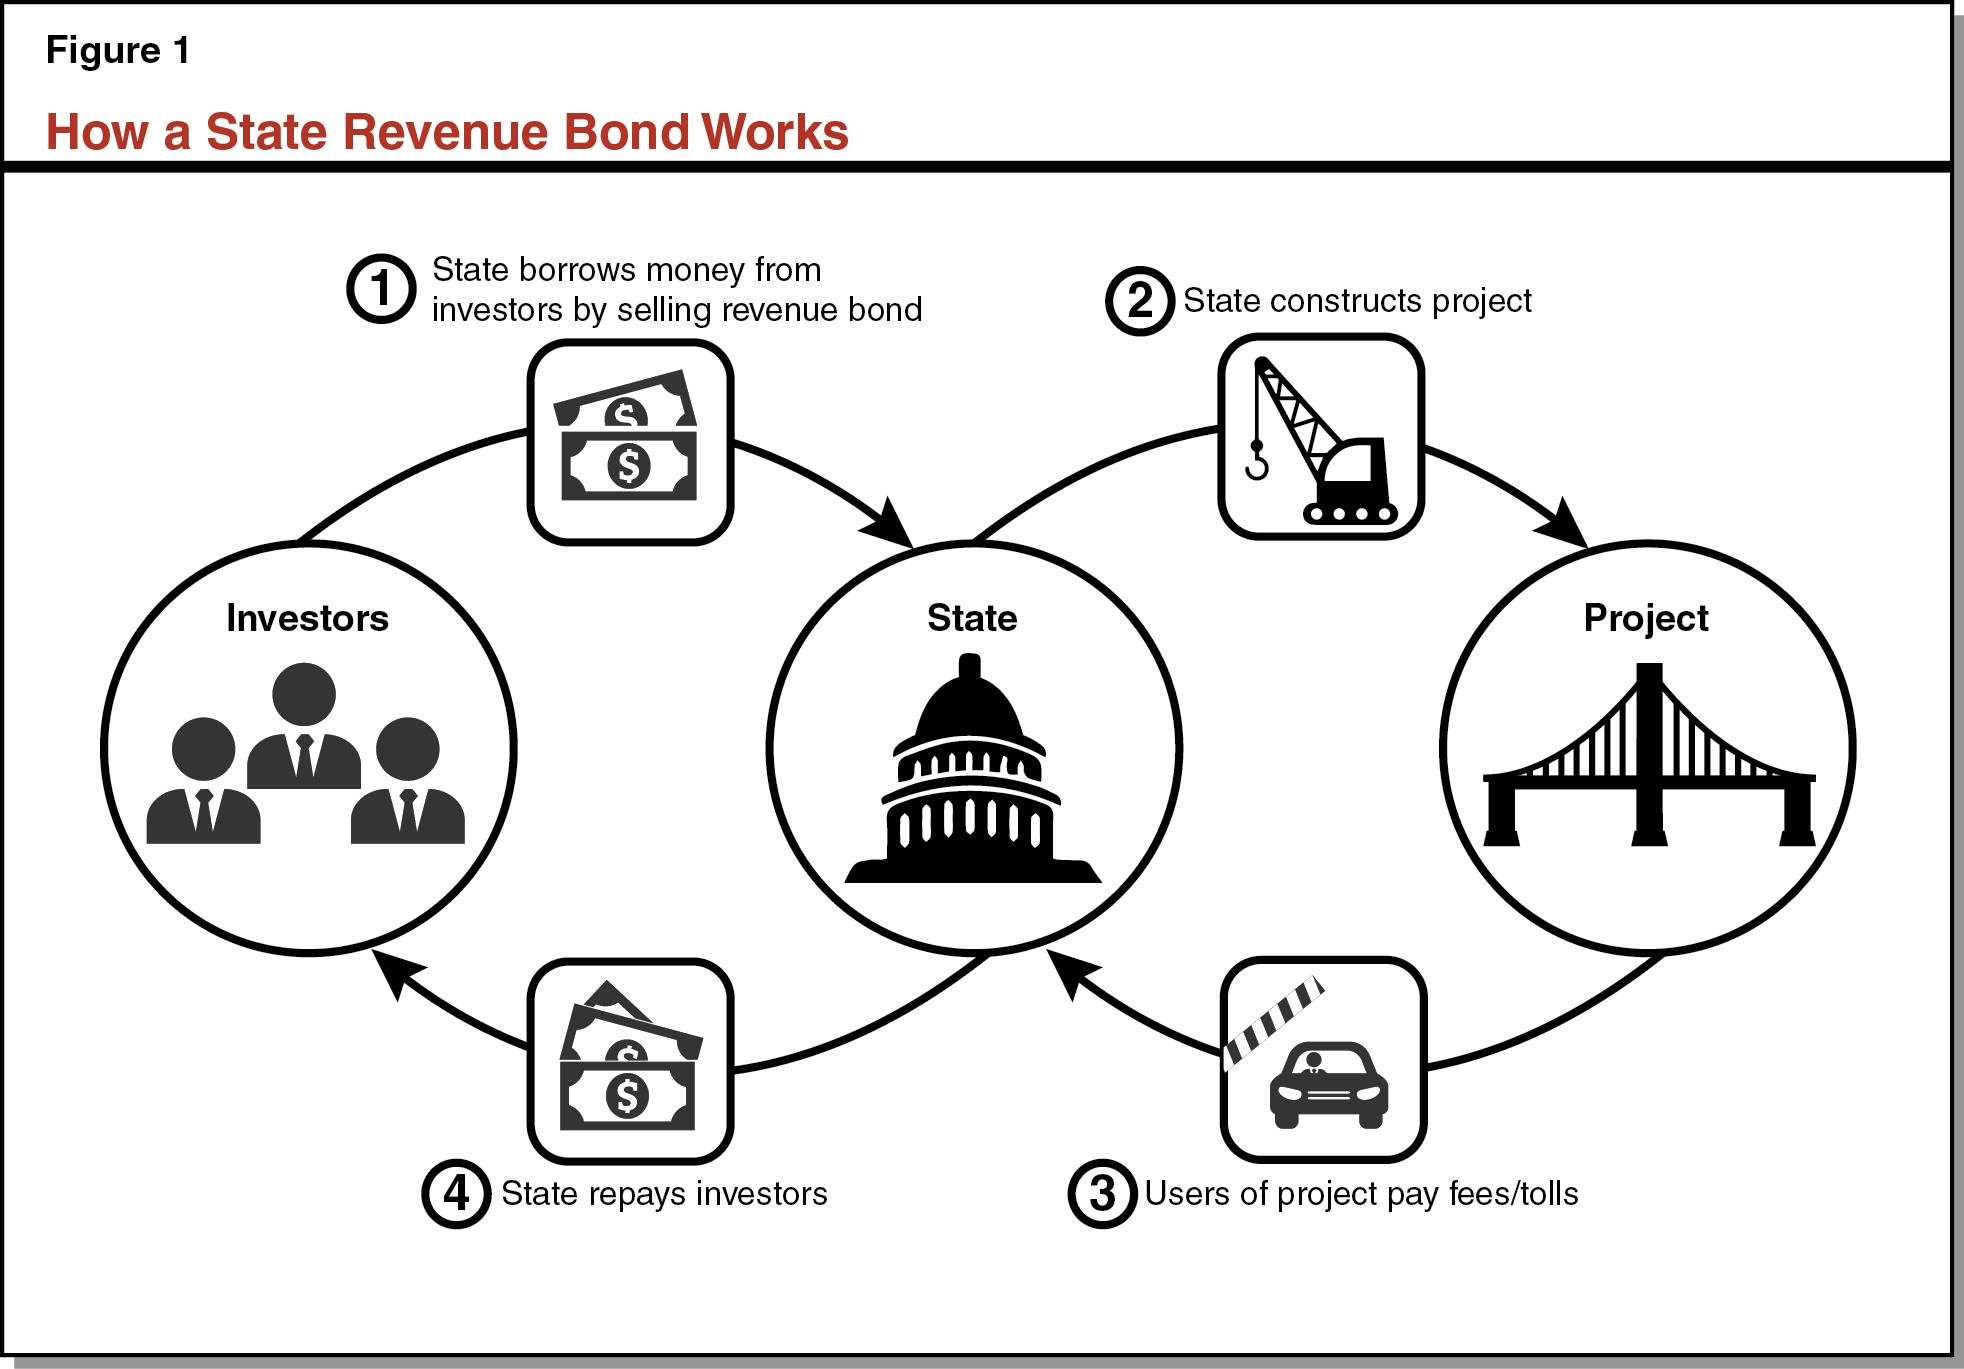 Figure 1 - How a State Revenue Bond Works